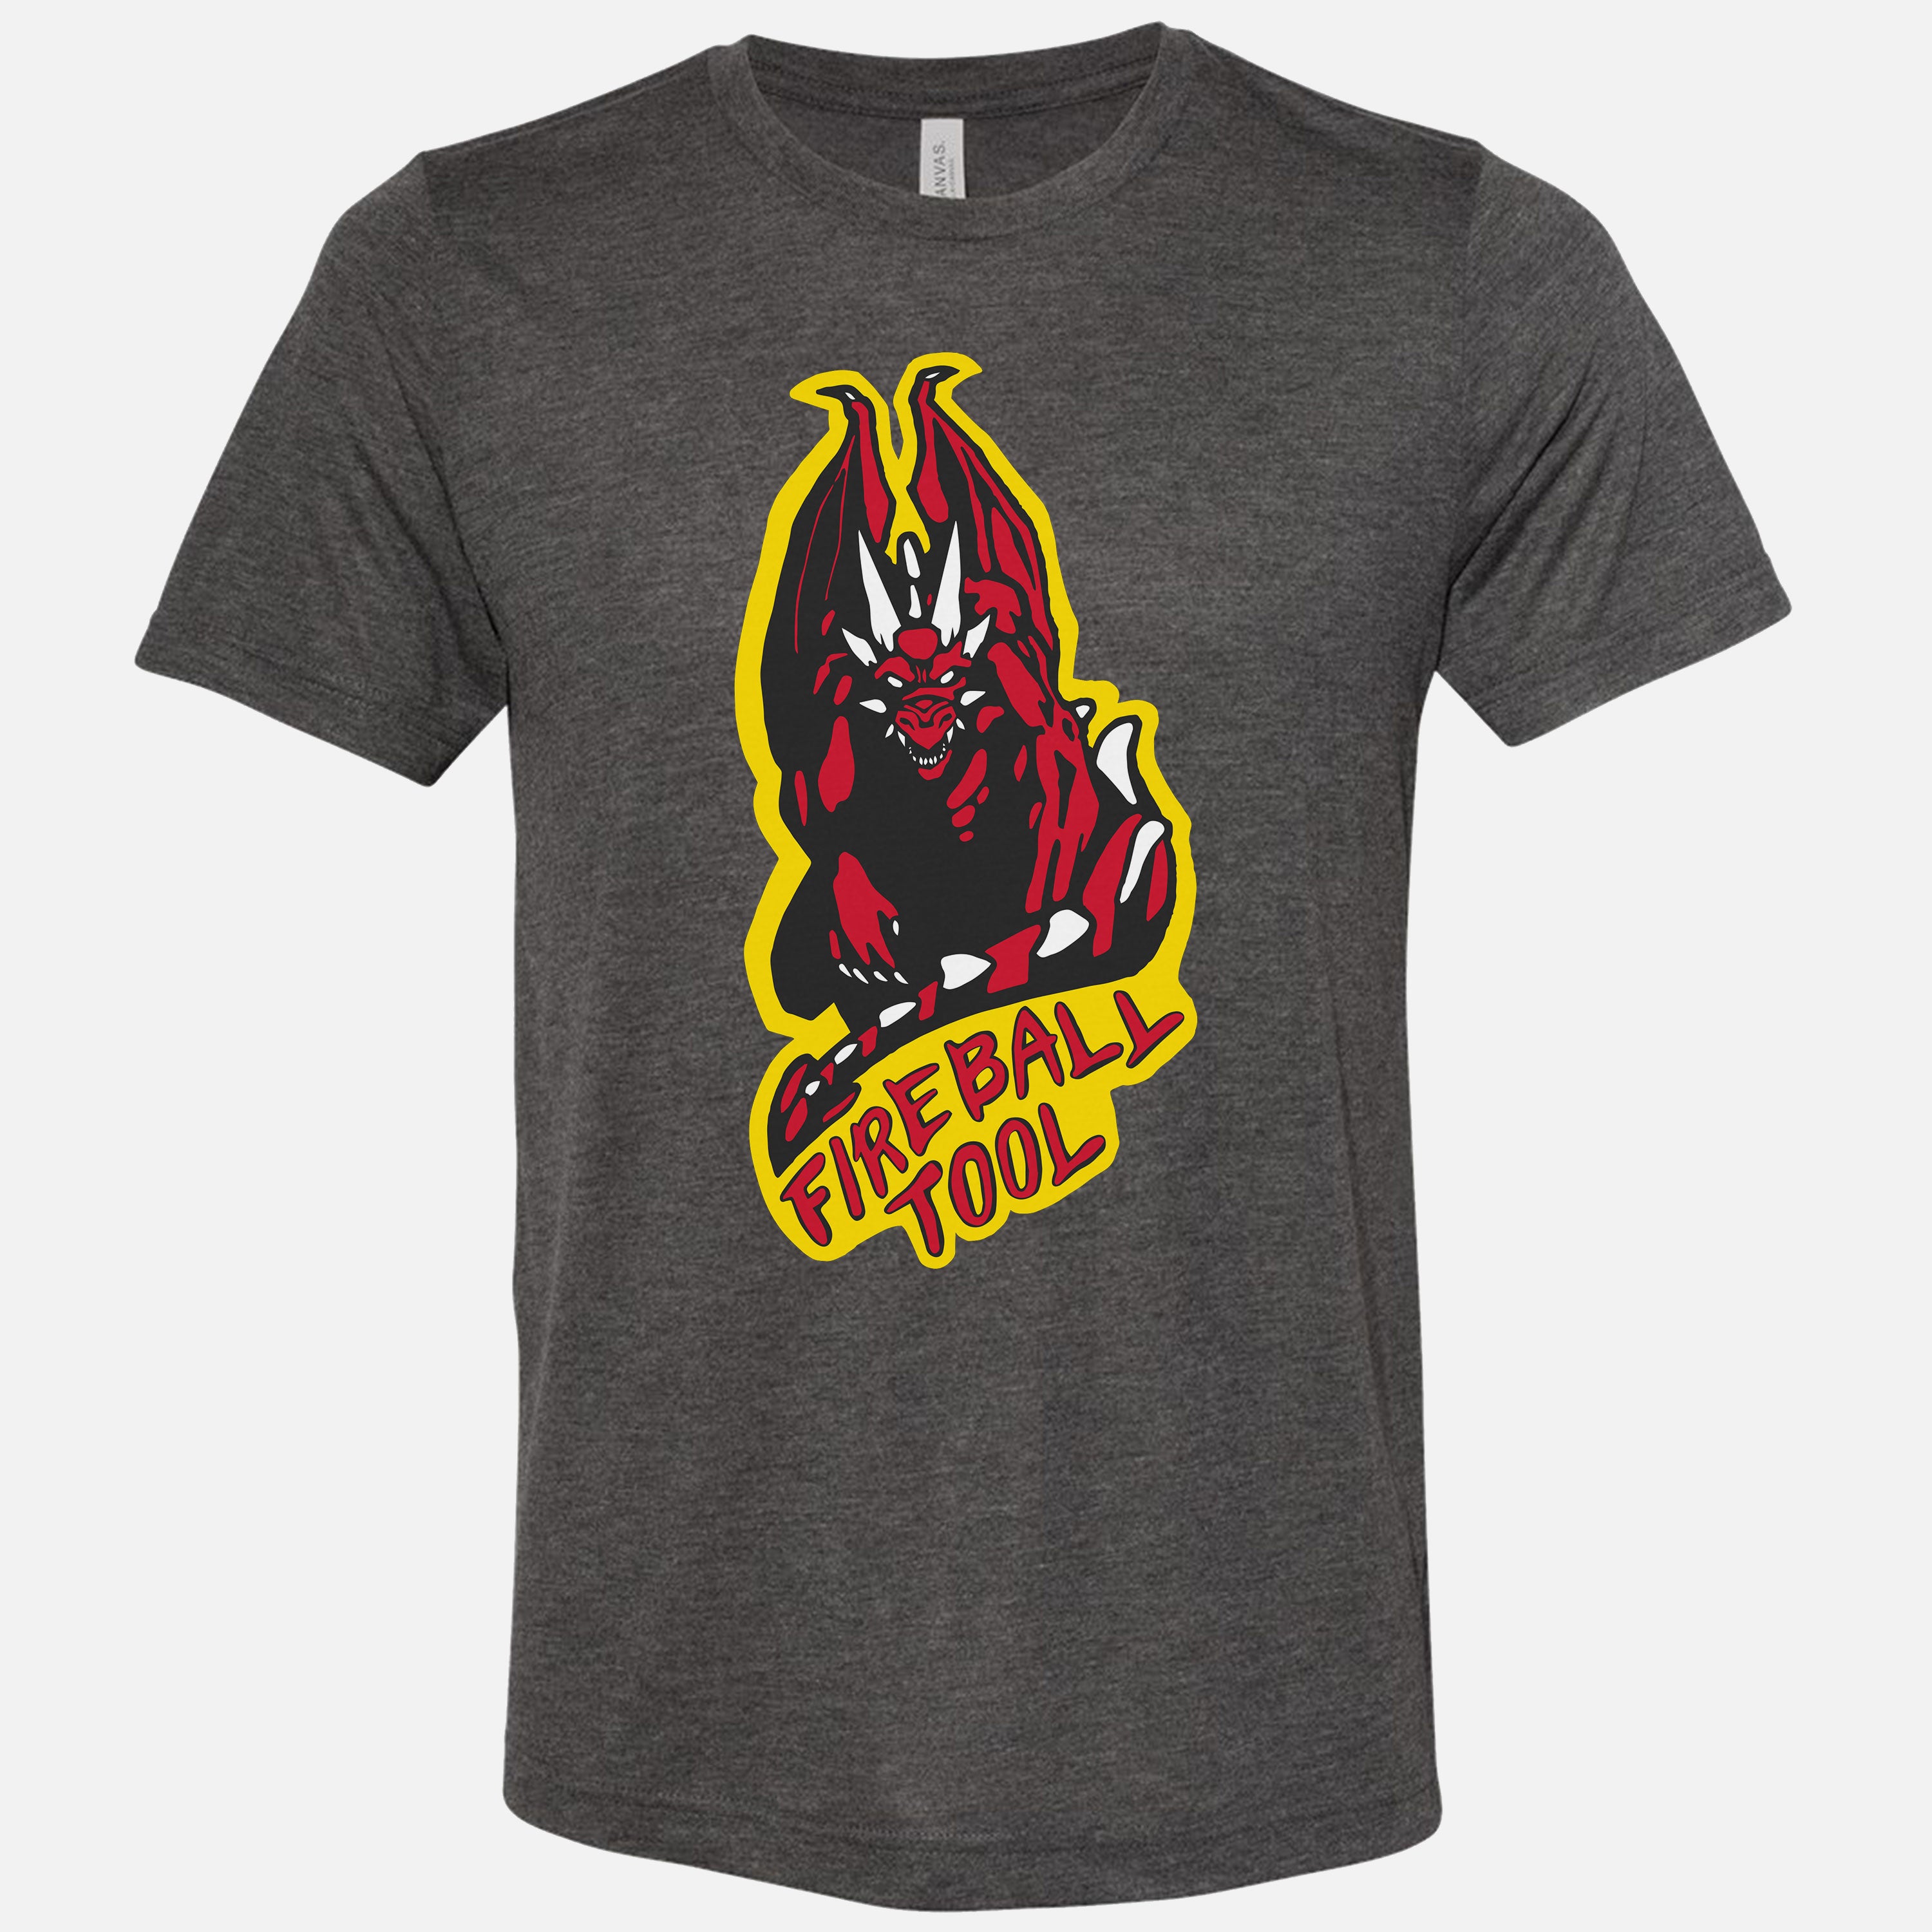 Fireball T-Shirt, Cobra Kai Style (Design 2)